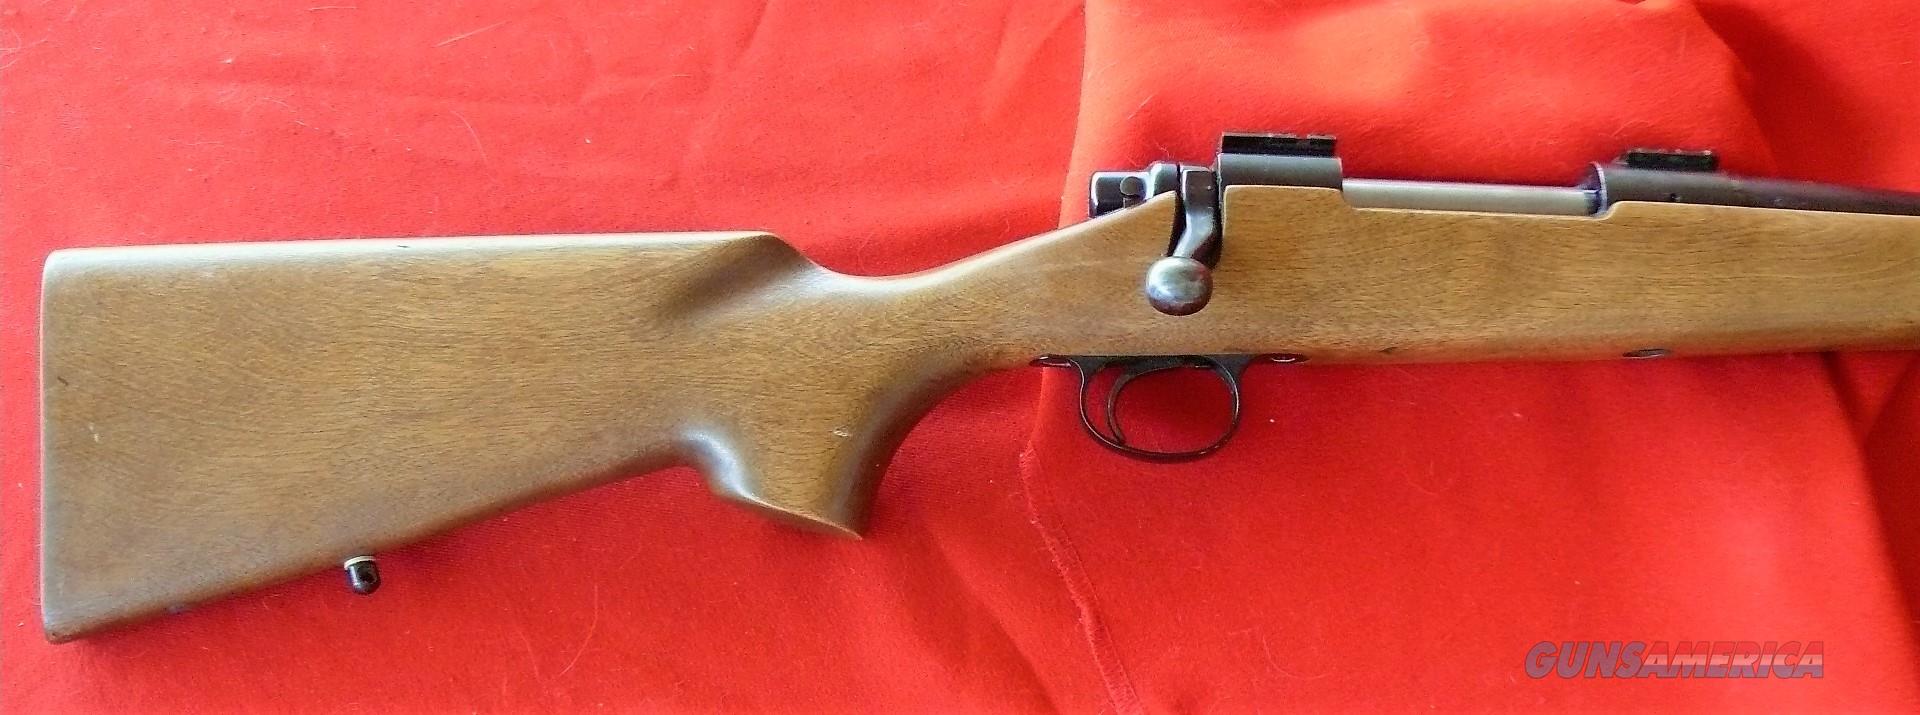 remington sportsman 78 barrel